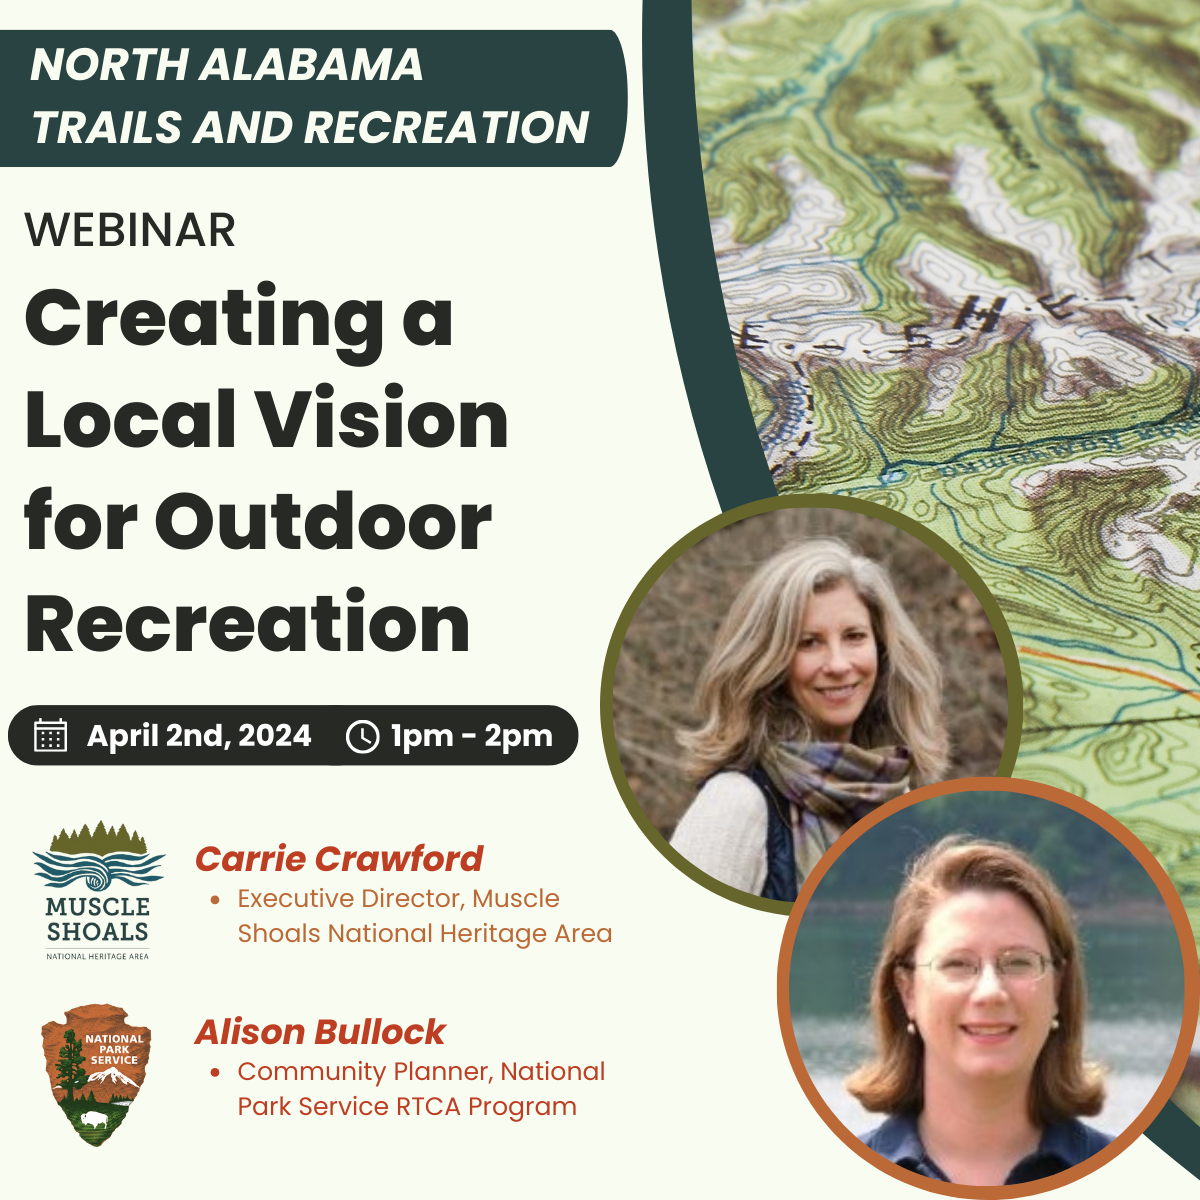 North Alabama Trails & Recreation (1200 x 1200 px) (4)